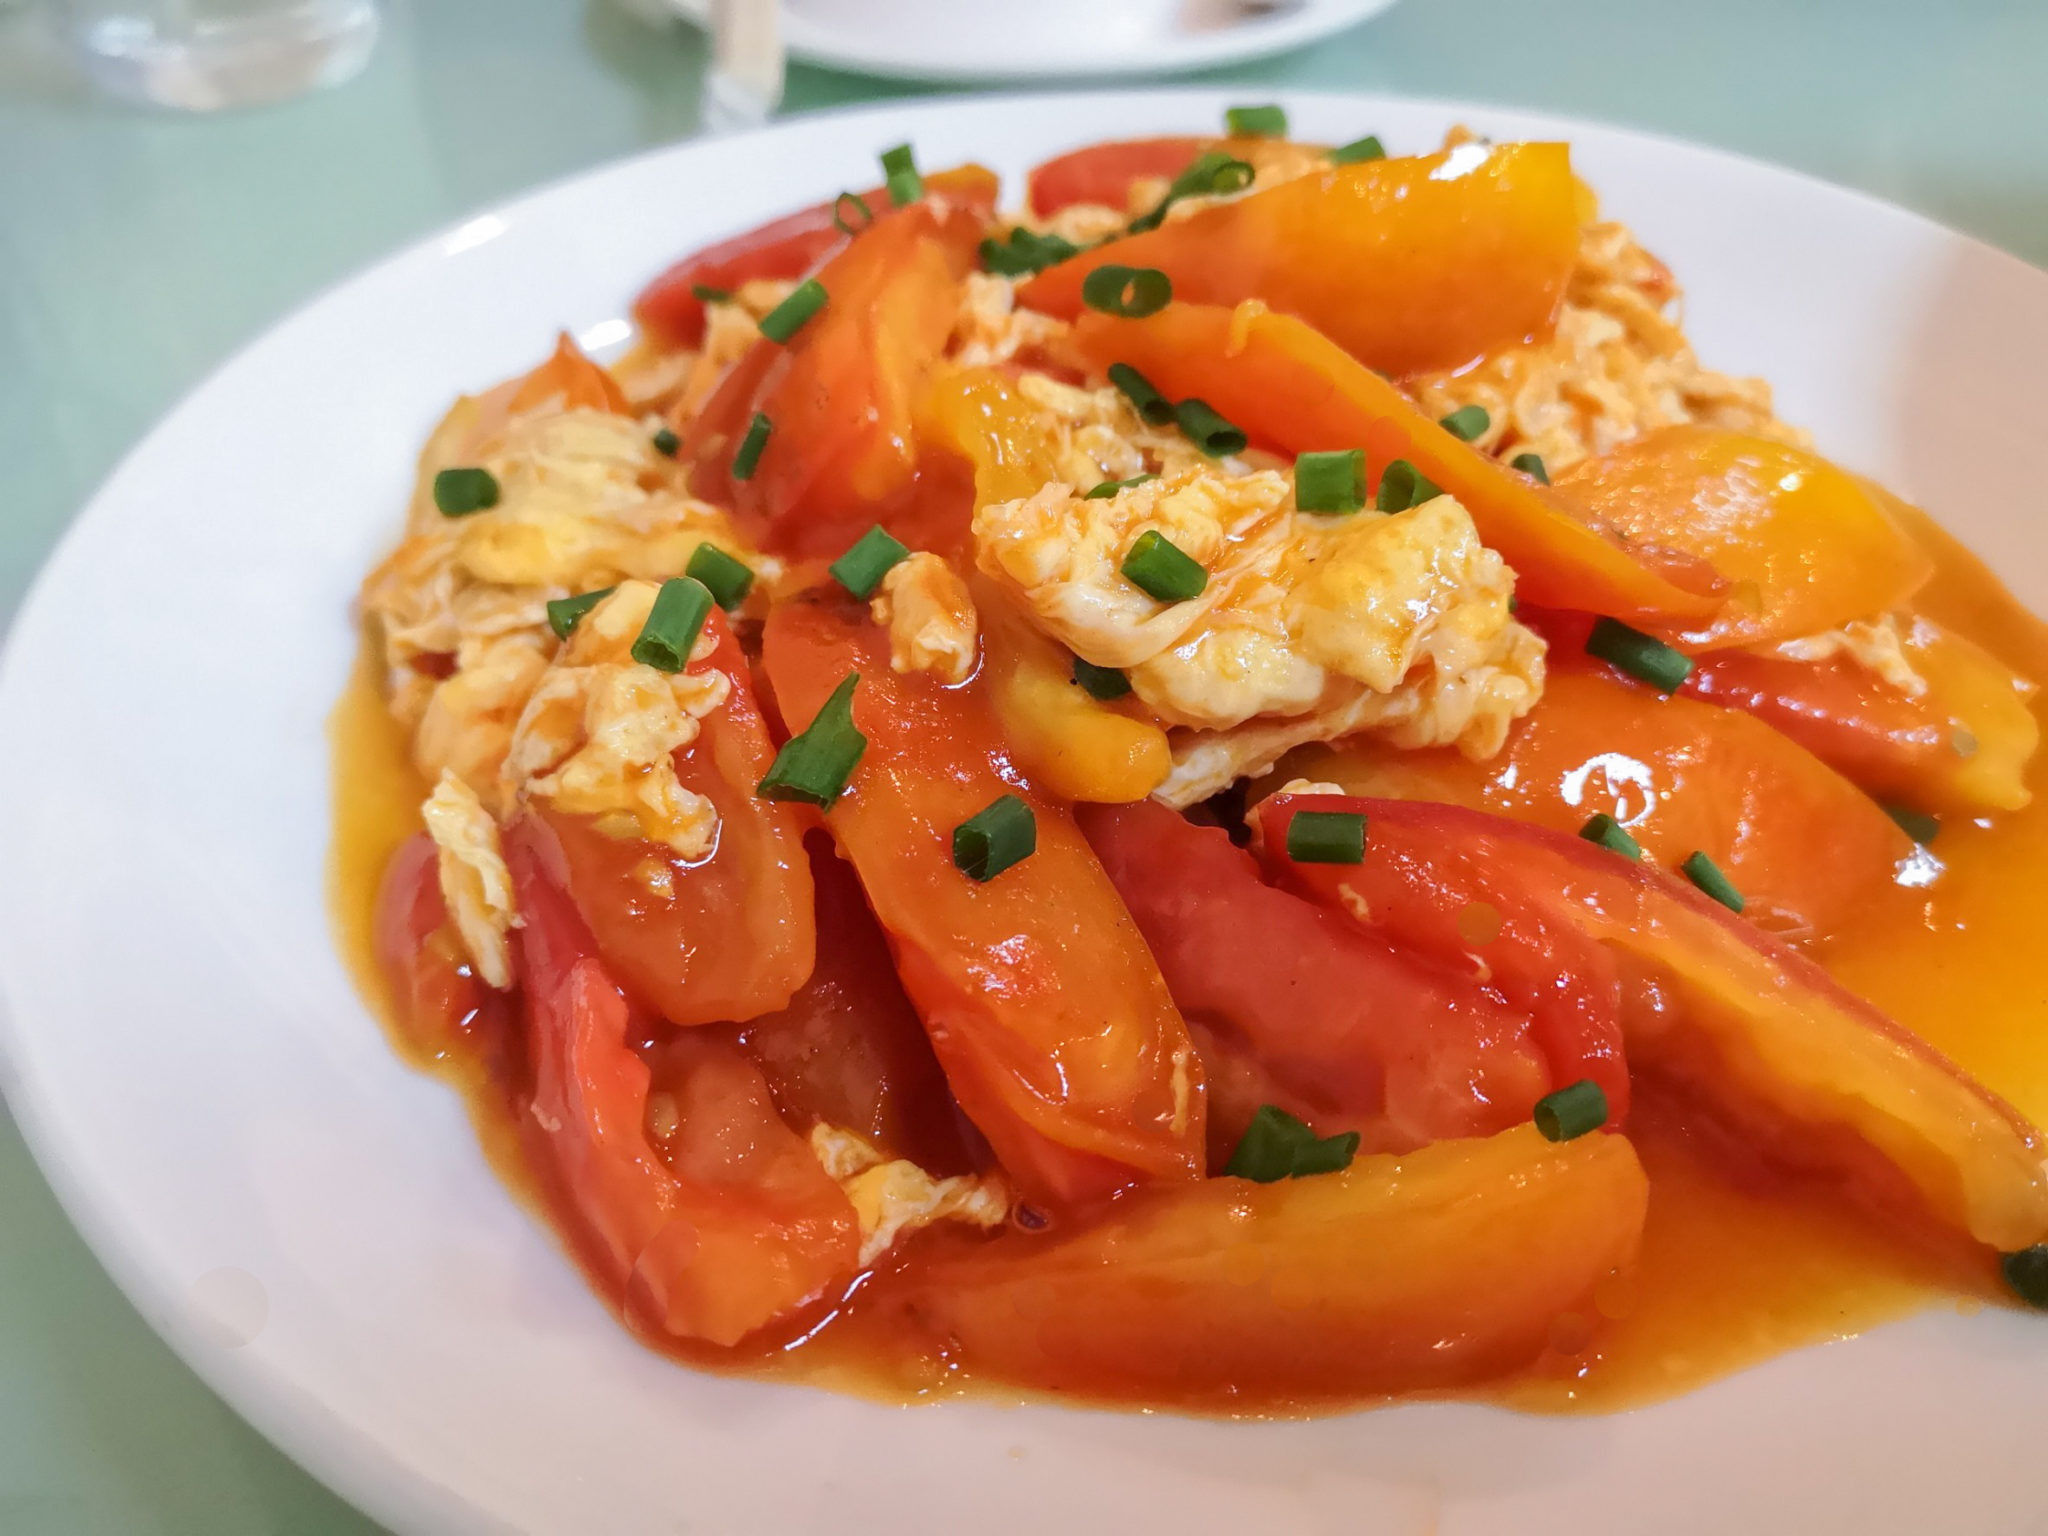 Easy Scrambled Eggs & Tomatoes Stir Fry – Fanqie Jidan (番茄鸡蛋)